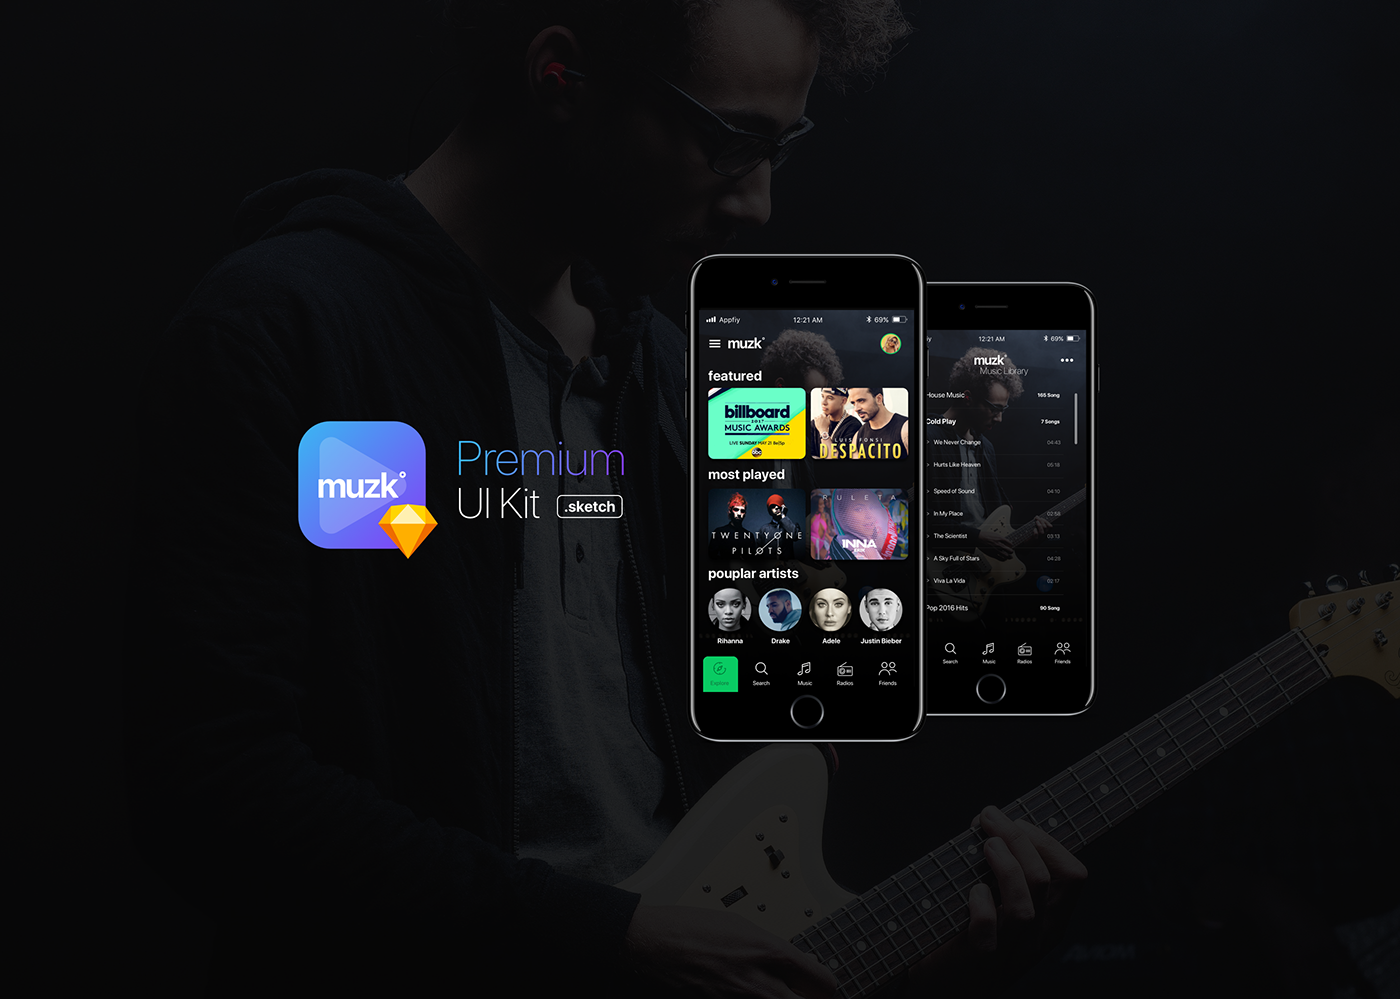 music sound music app apps UI ux moe slah uikit ui kit premium